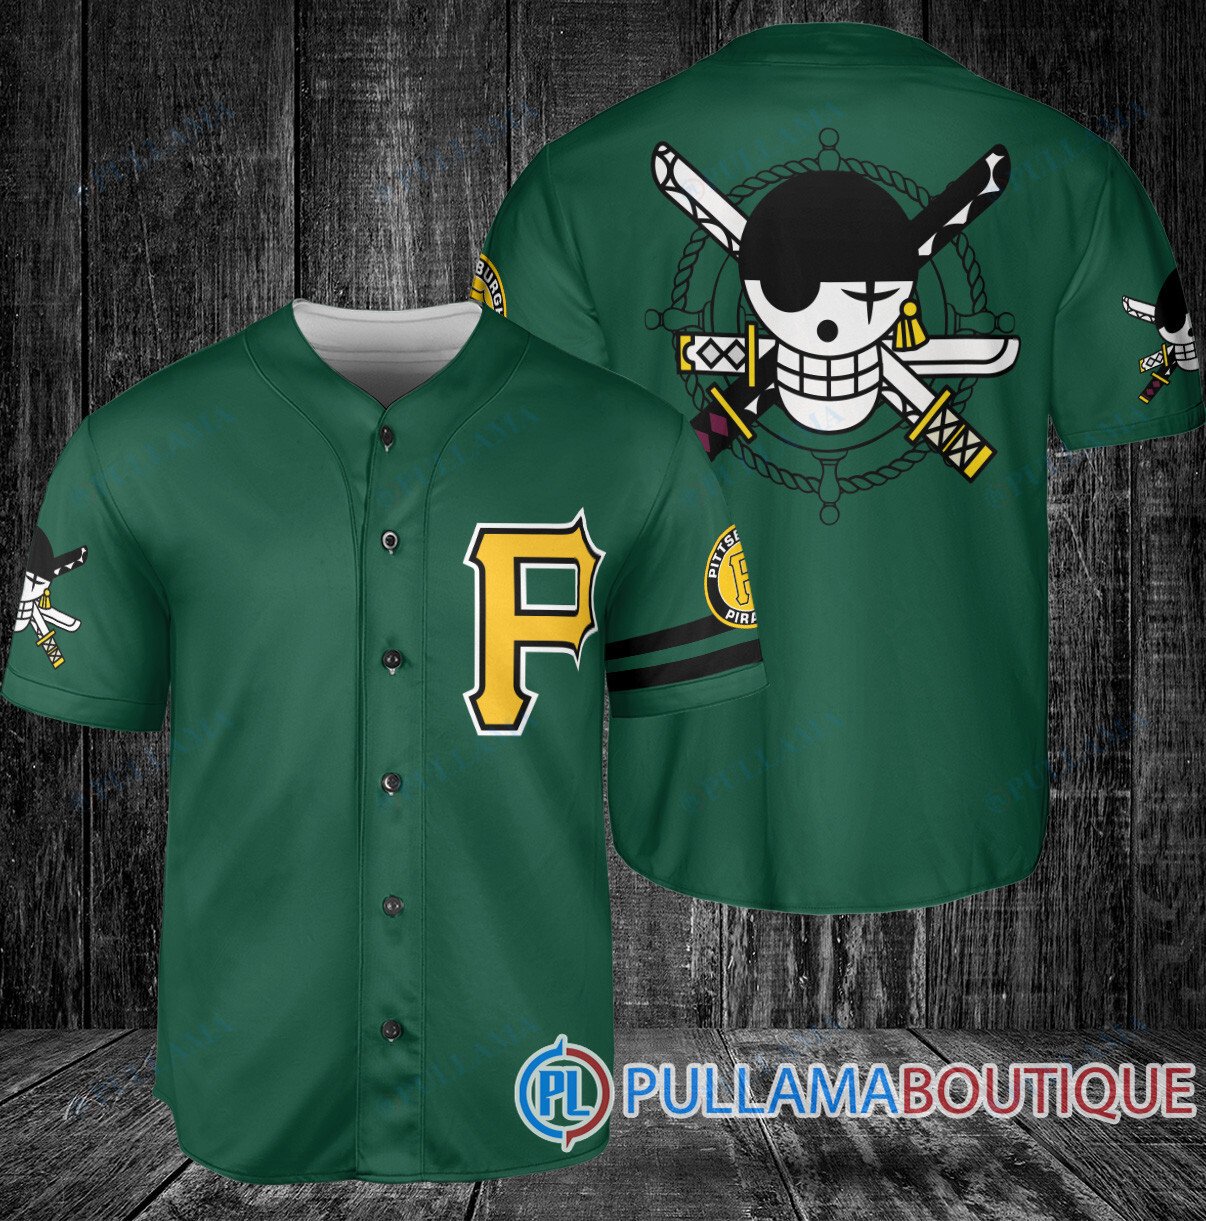 pittsburgh pirates uniforms